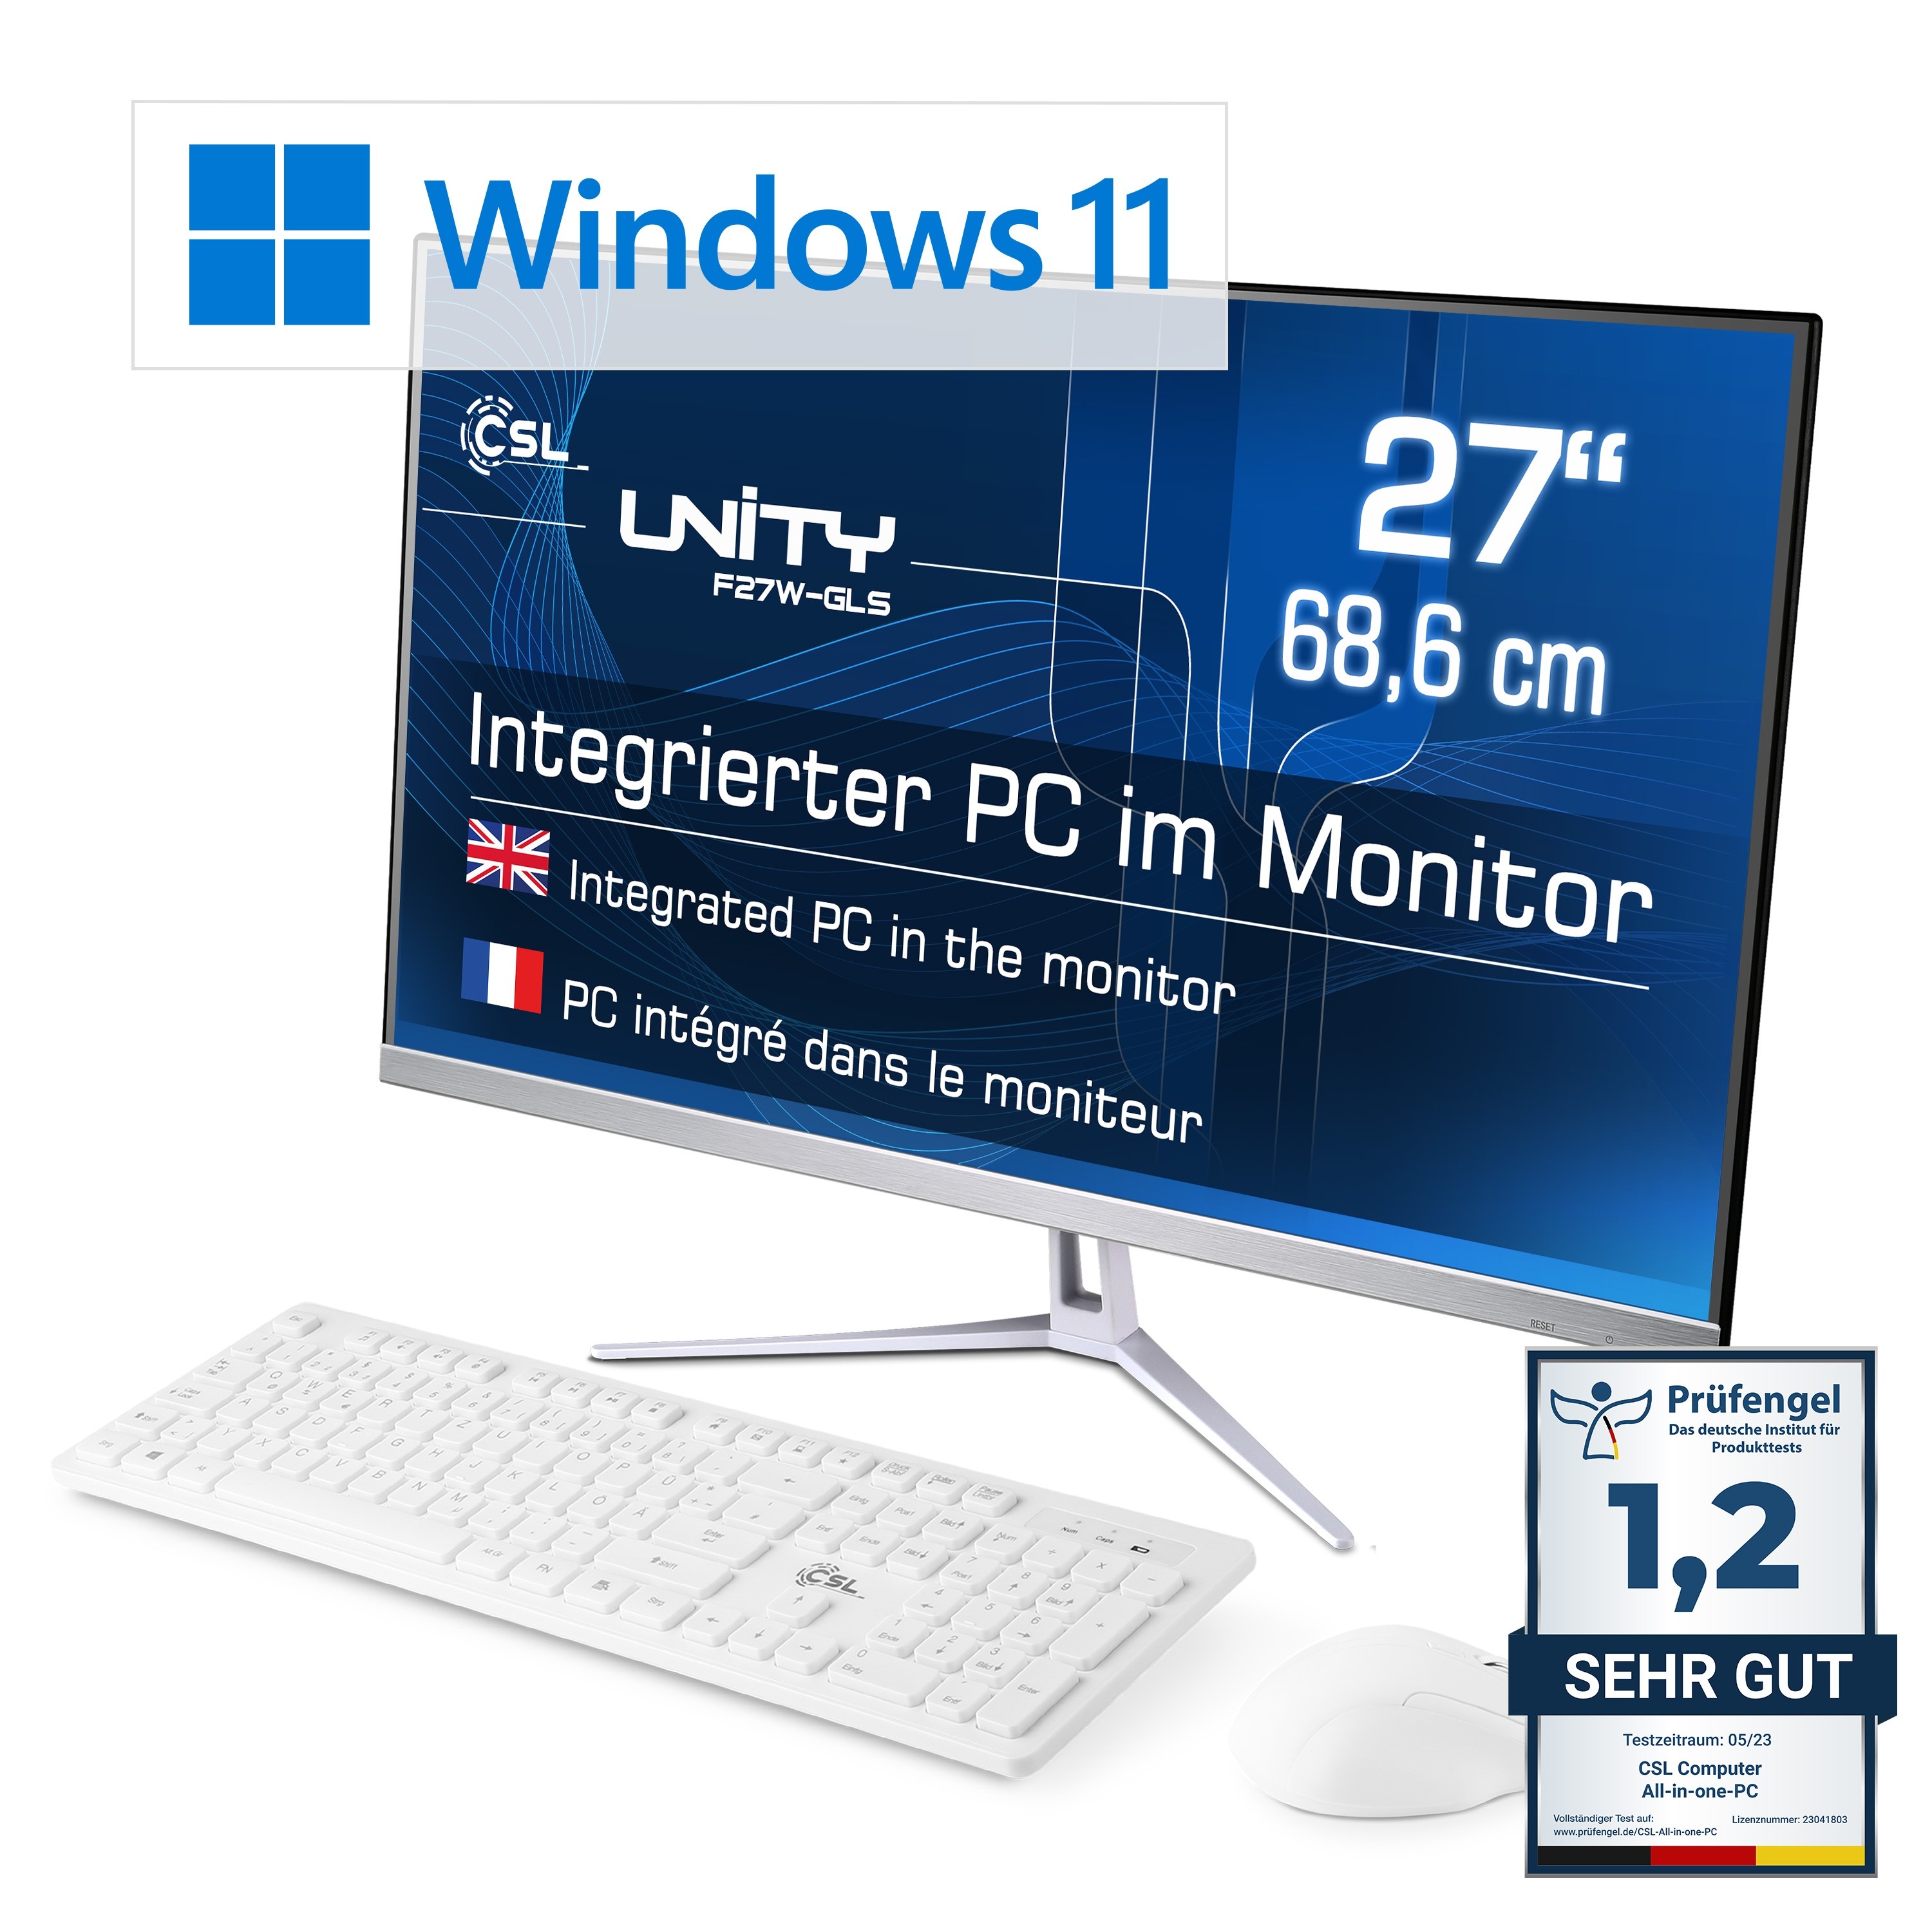 CSL Computer | All-in-One-PC / F27W-JLS GB CSL / 11 16 / Windows Unity GB 256 RAM Home